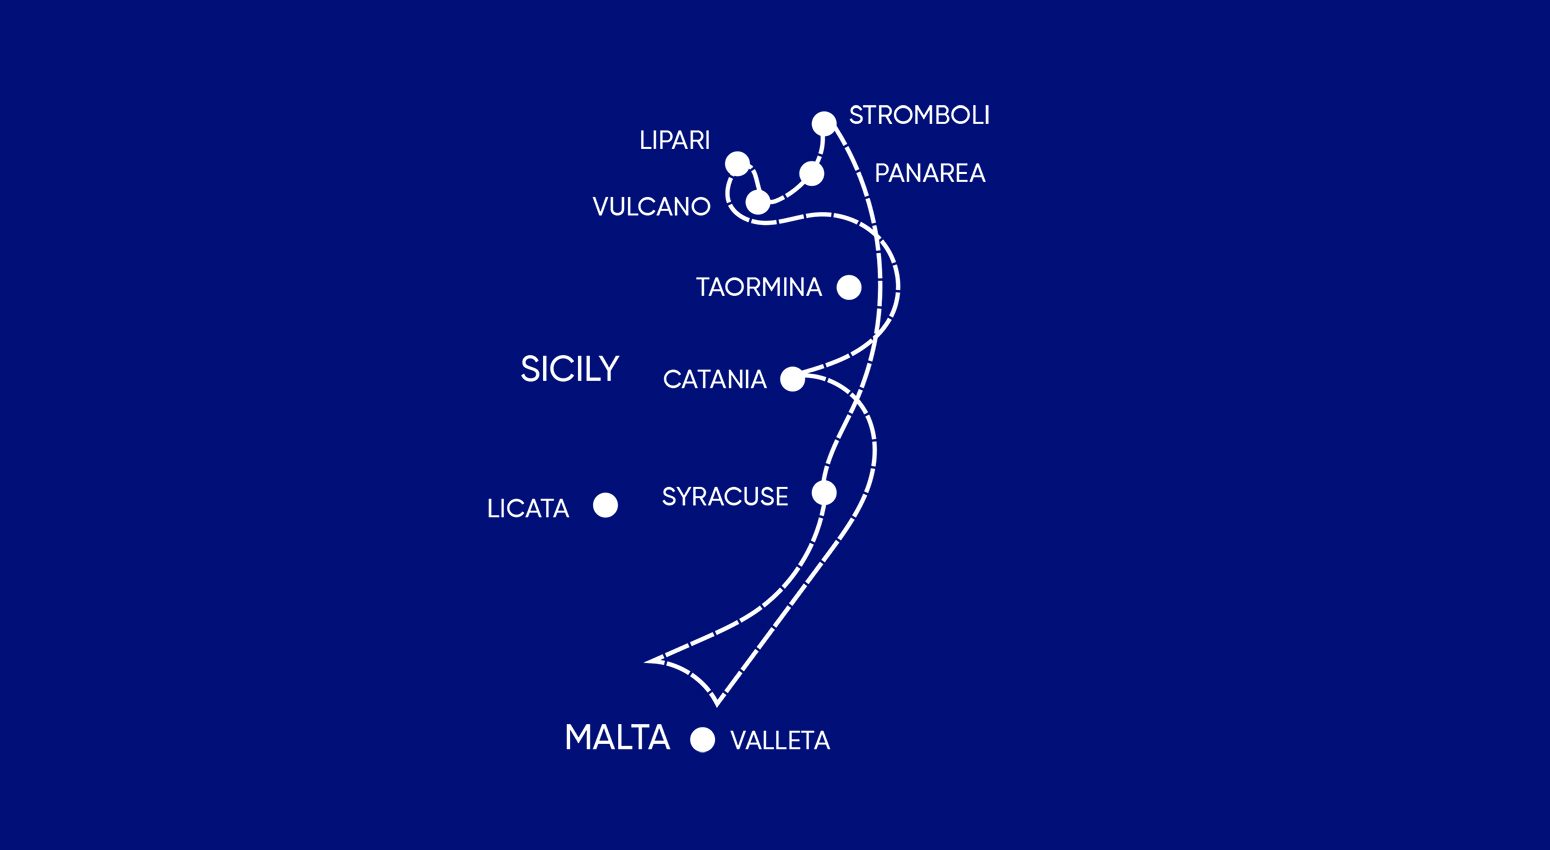 Variety Cruises itinerary through Italy, Malta, and the Aeolian islands